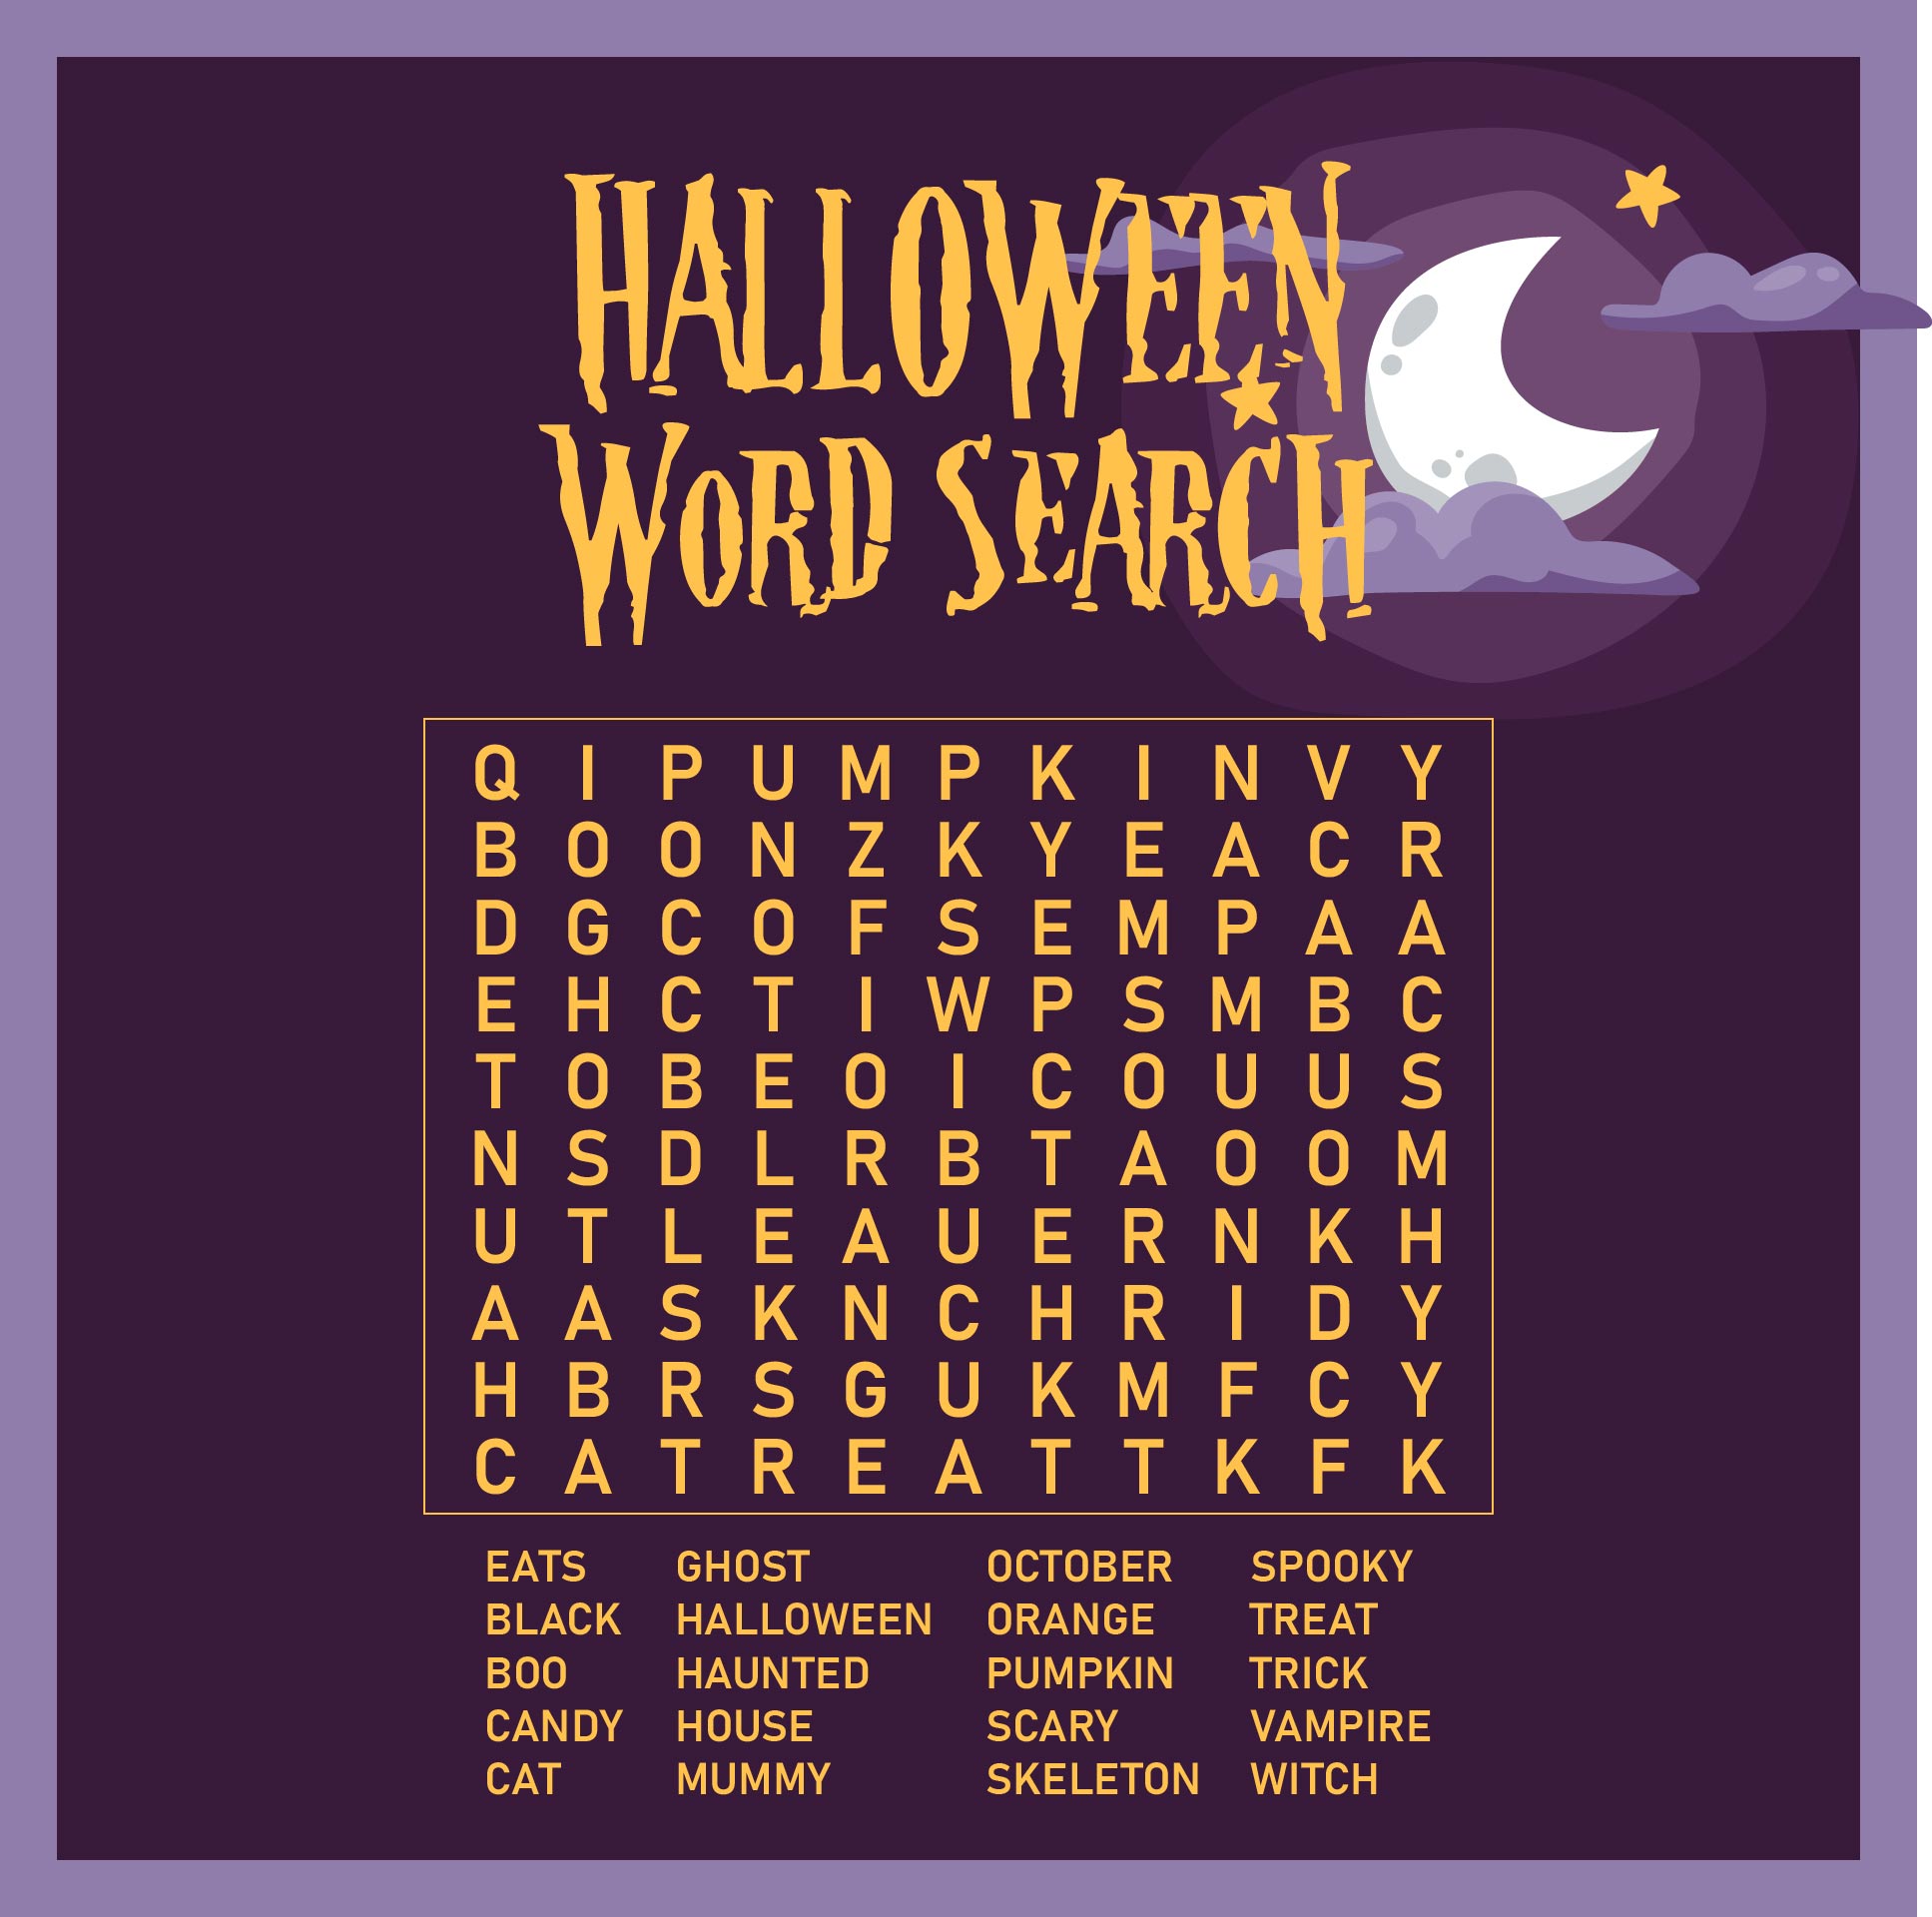 7-best-images-of-printable-halloween-word-search-pdf-printable